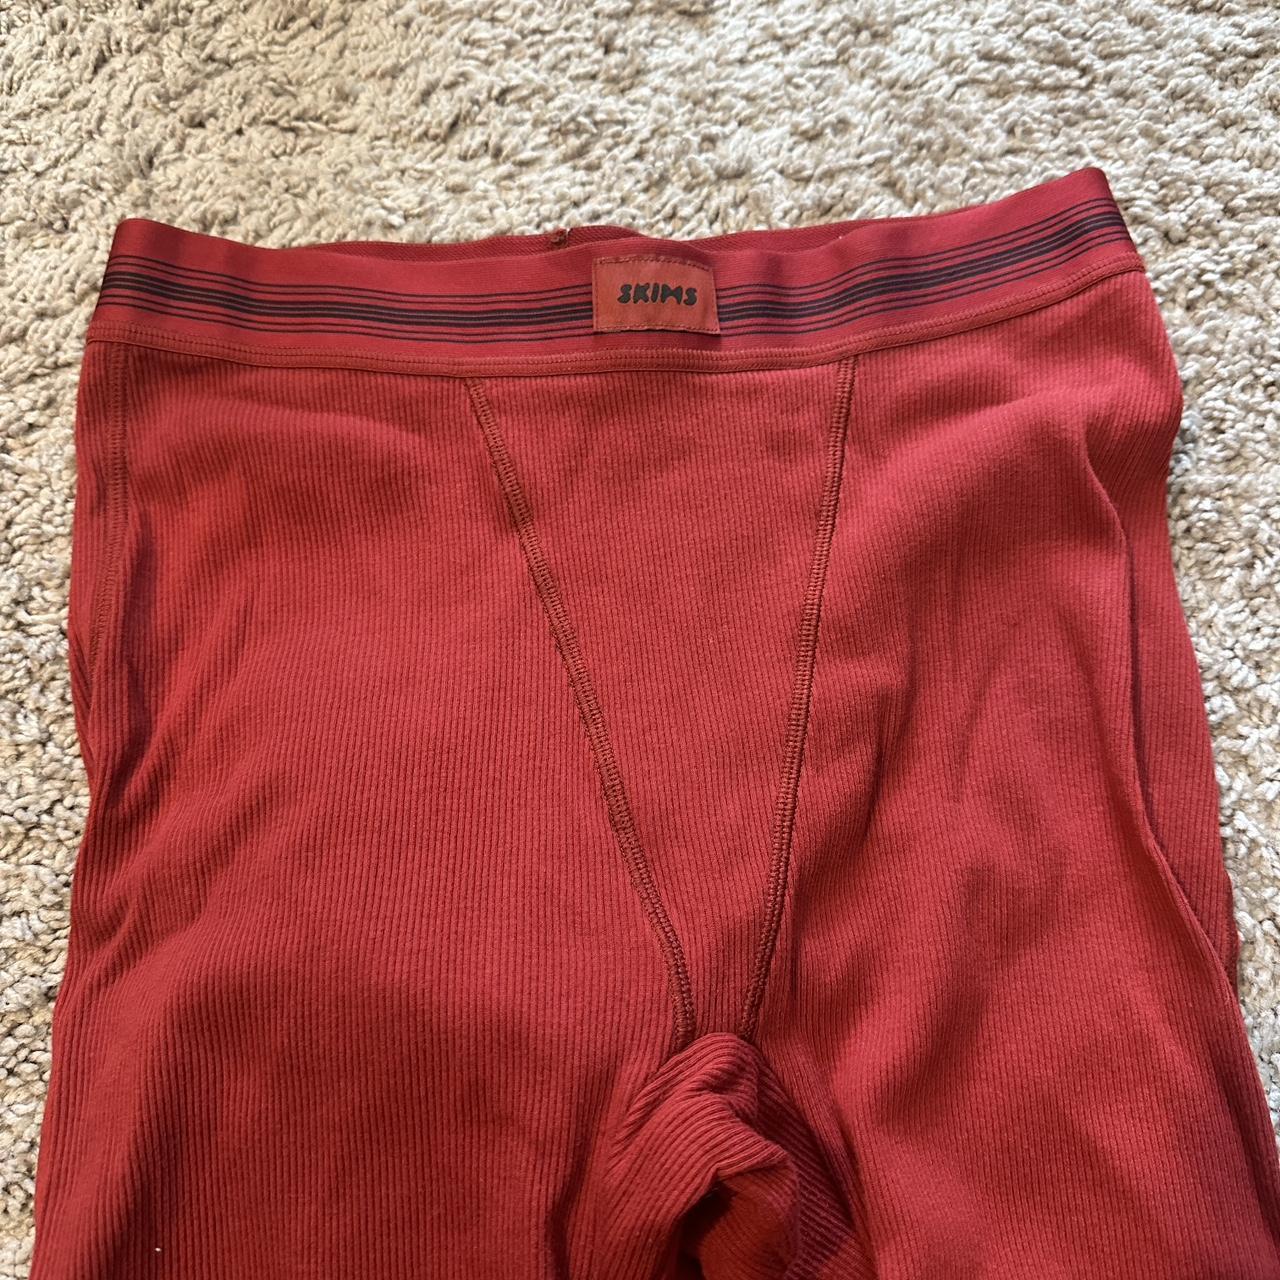 small red skims loungewear cuffed bottom leggings. - Depop